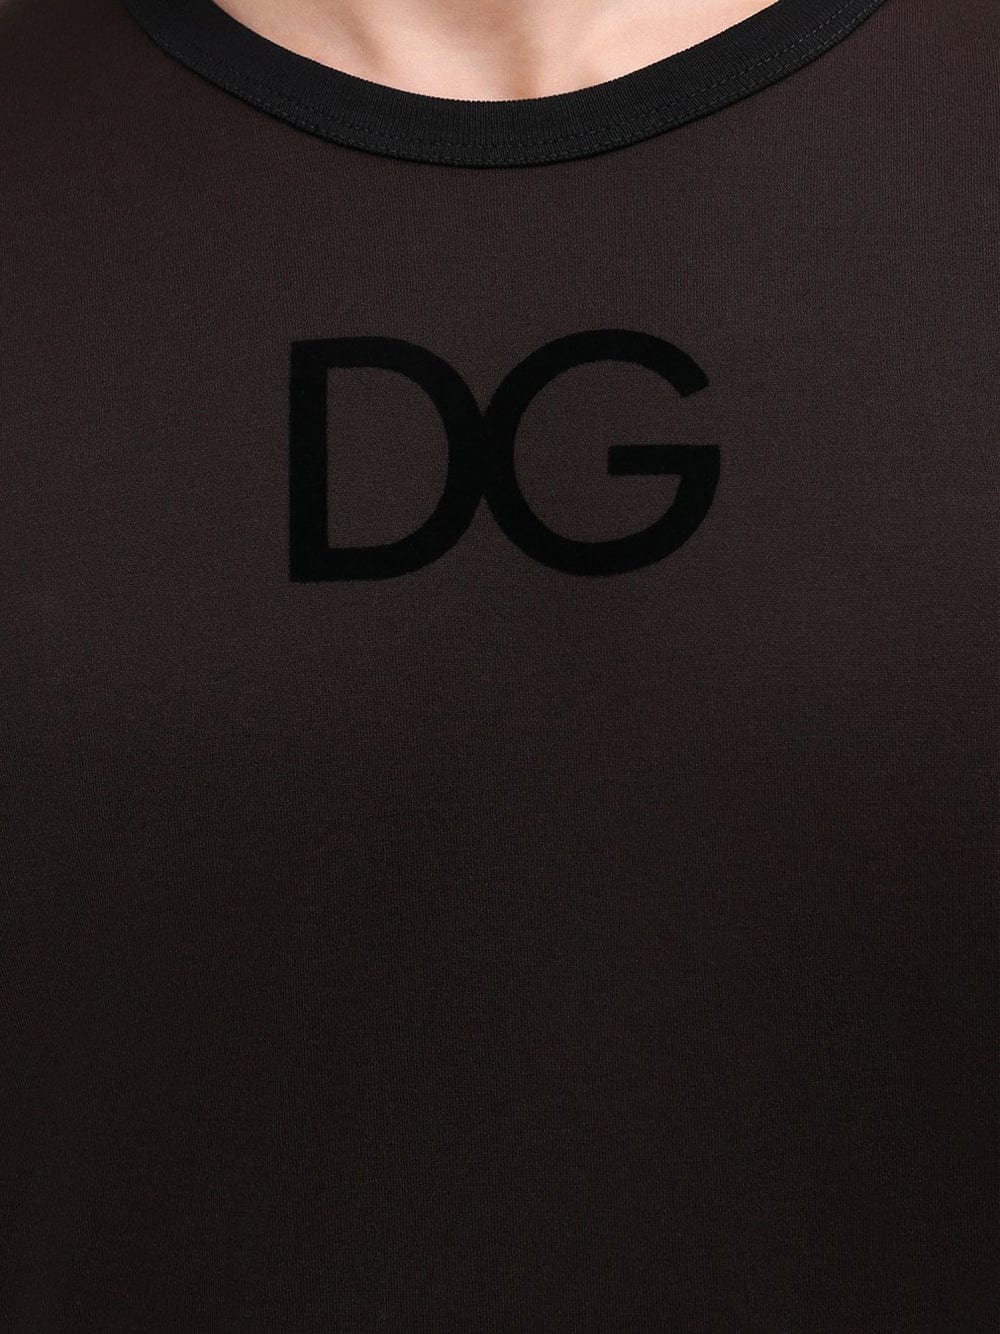 Dolce & Gabbana Flocked DG Logo Sweatshirt